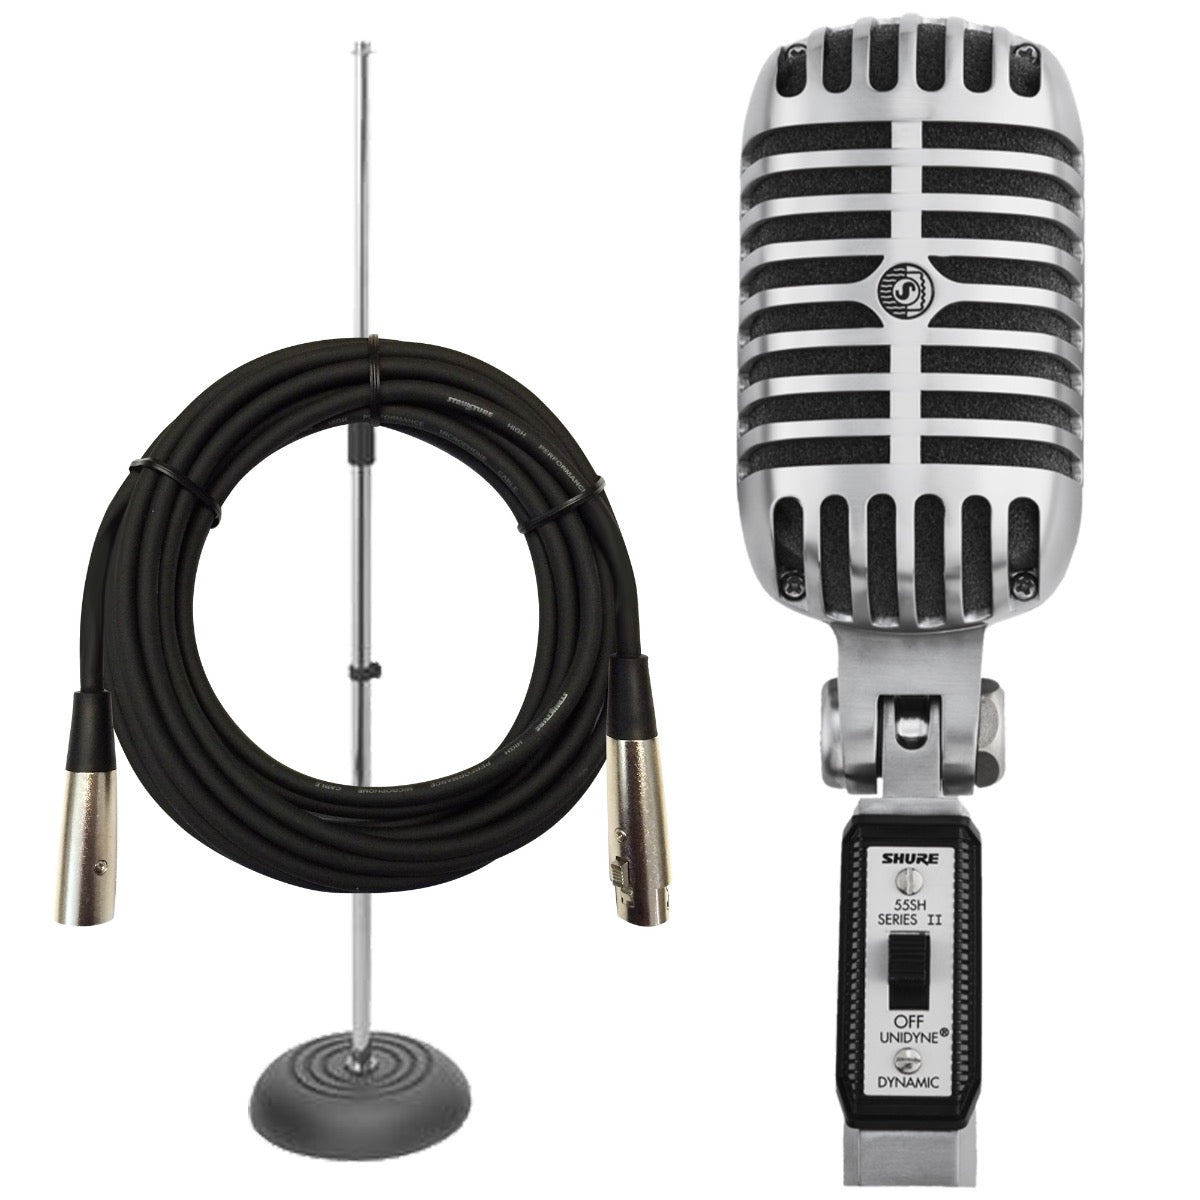 Shure 55SH Series II Unidyne Vocal Microphone PERFORMER PAK